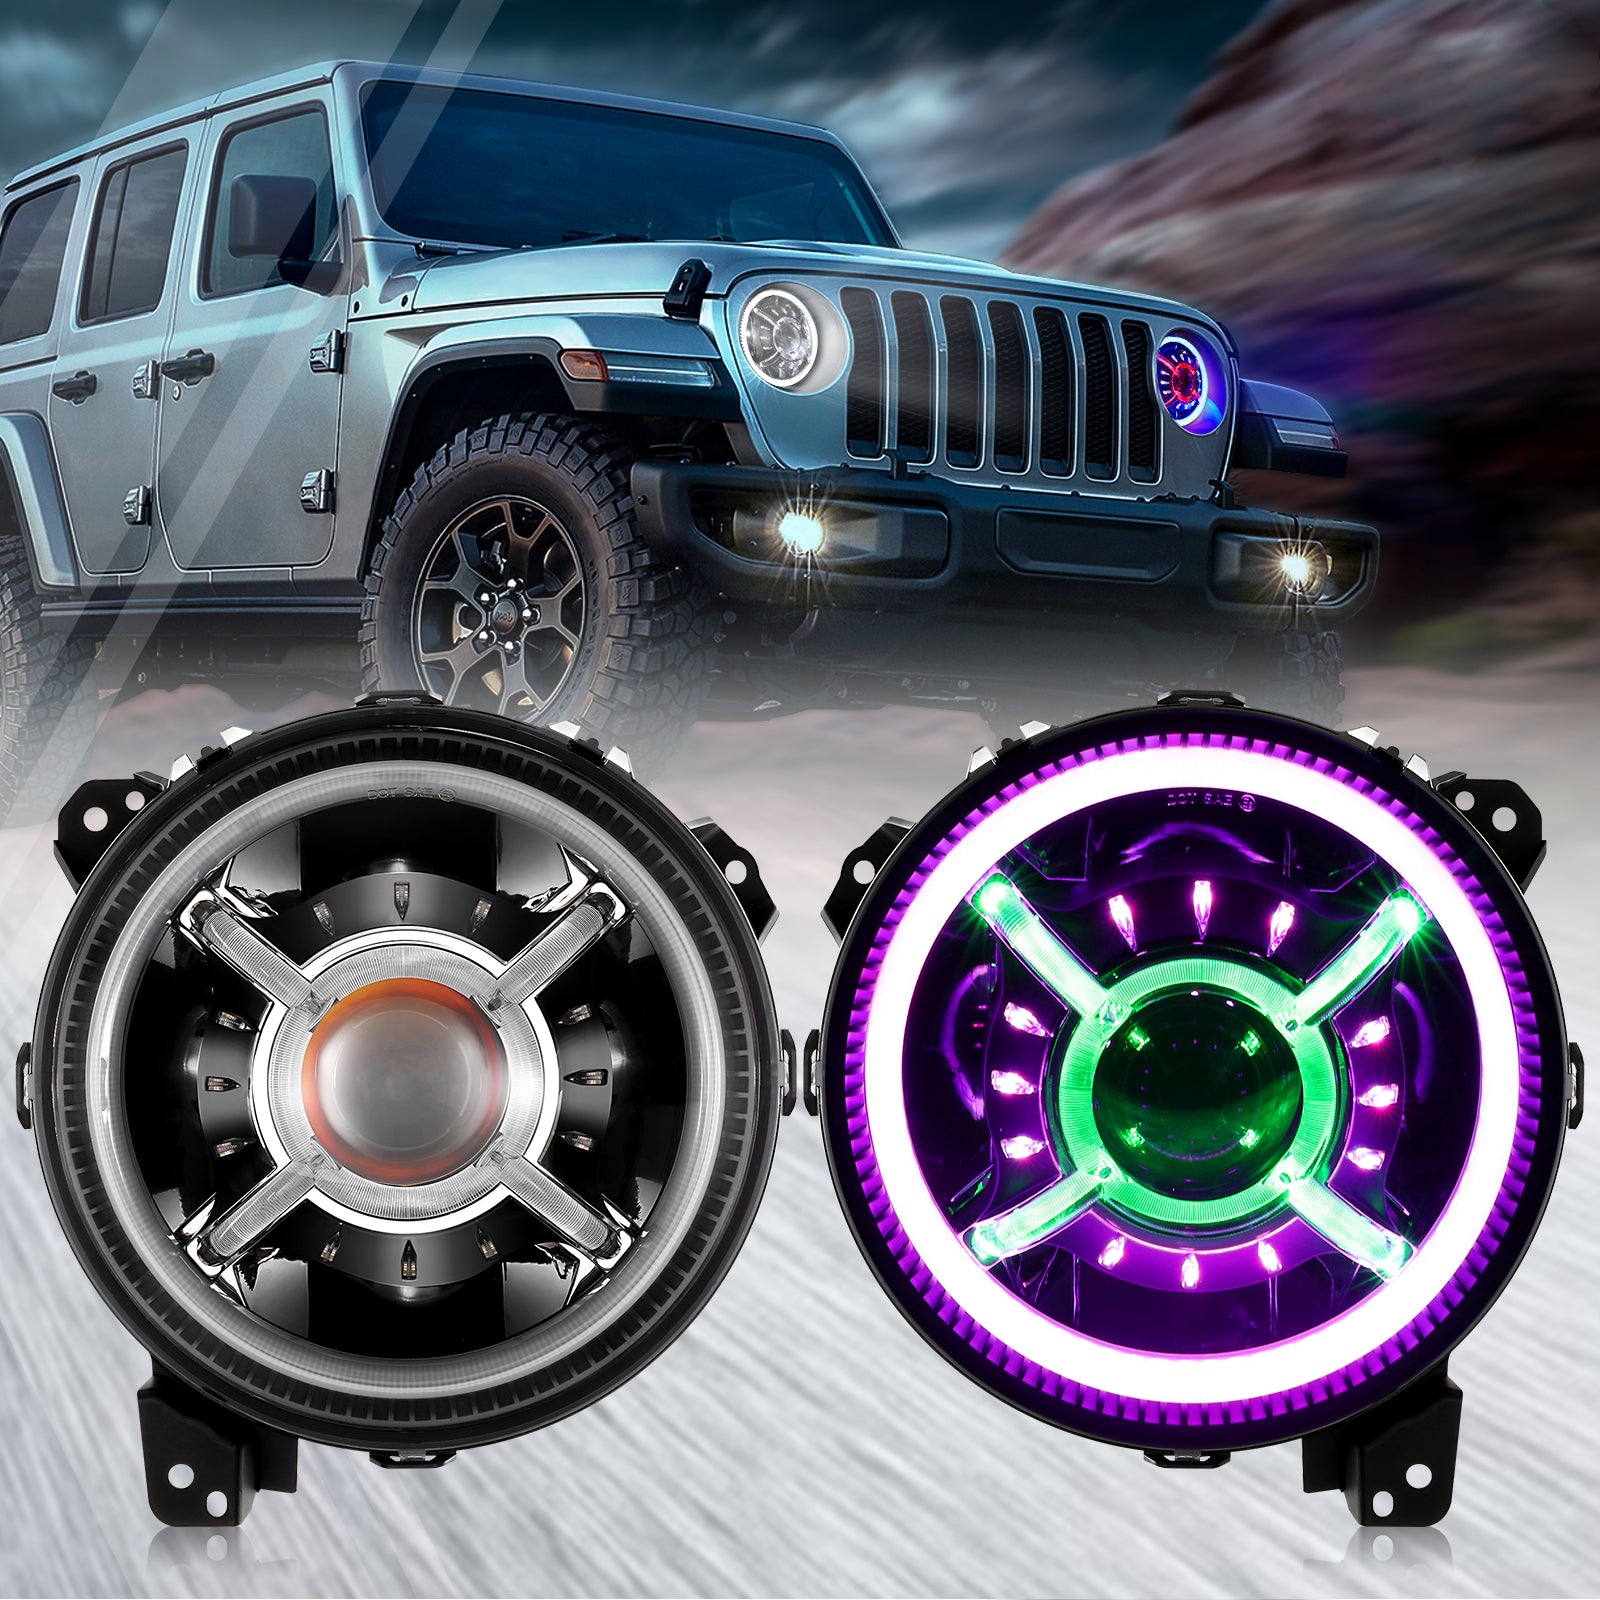 Jeep Specific Kits – Auxbeam Led Light